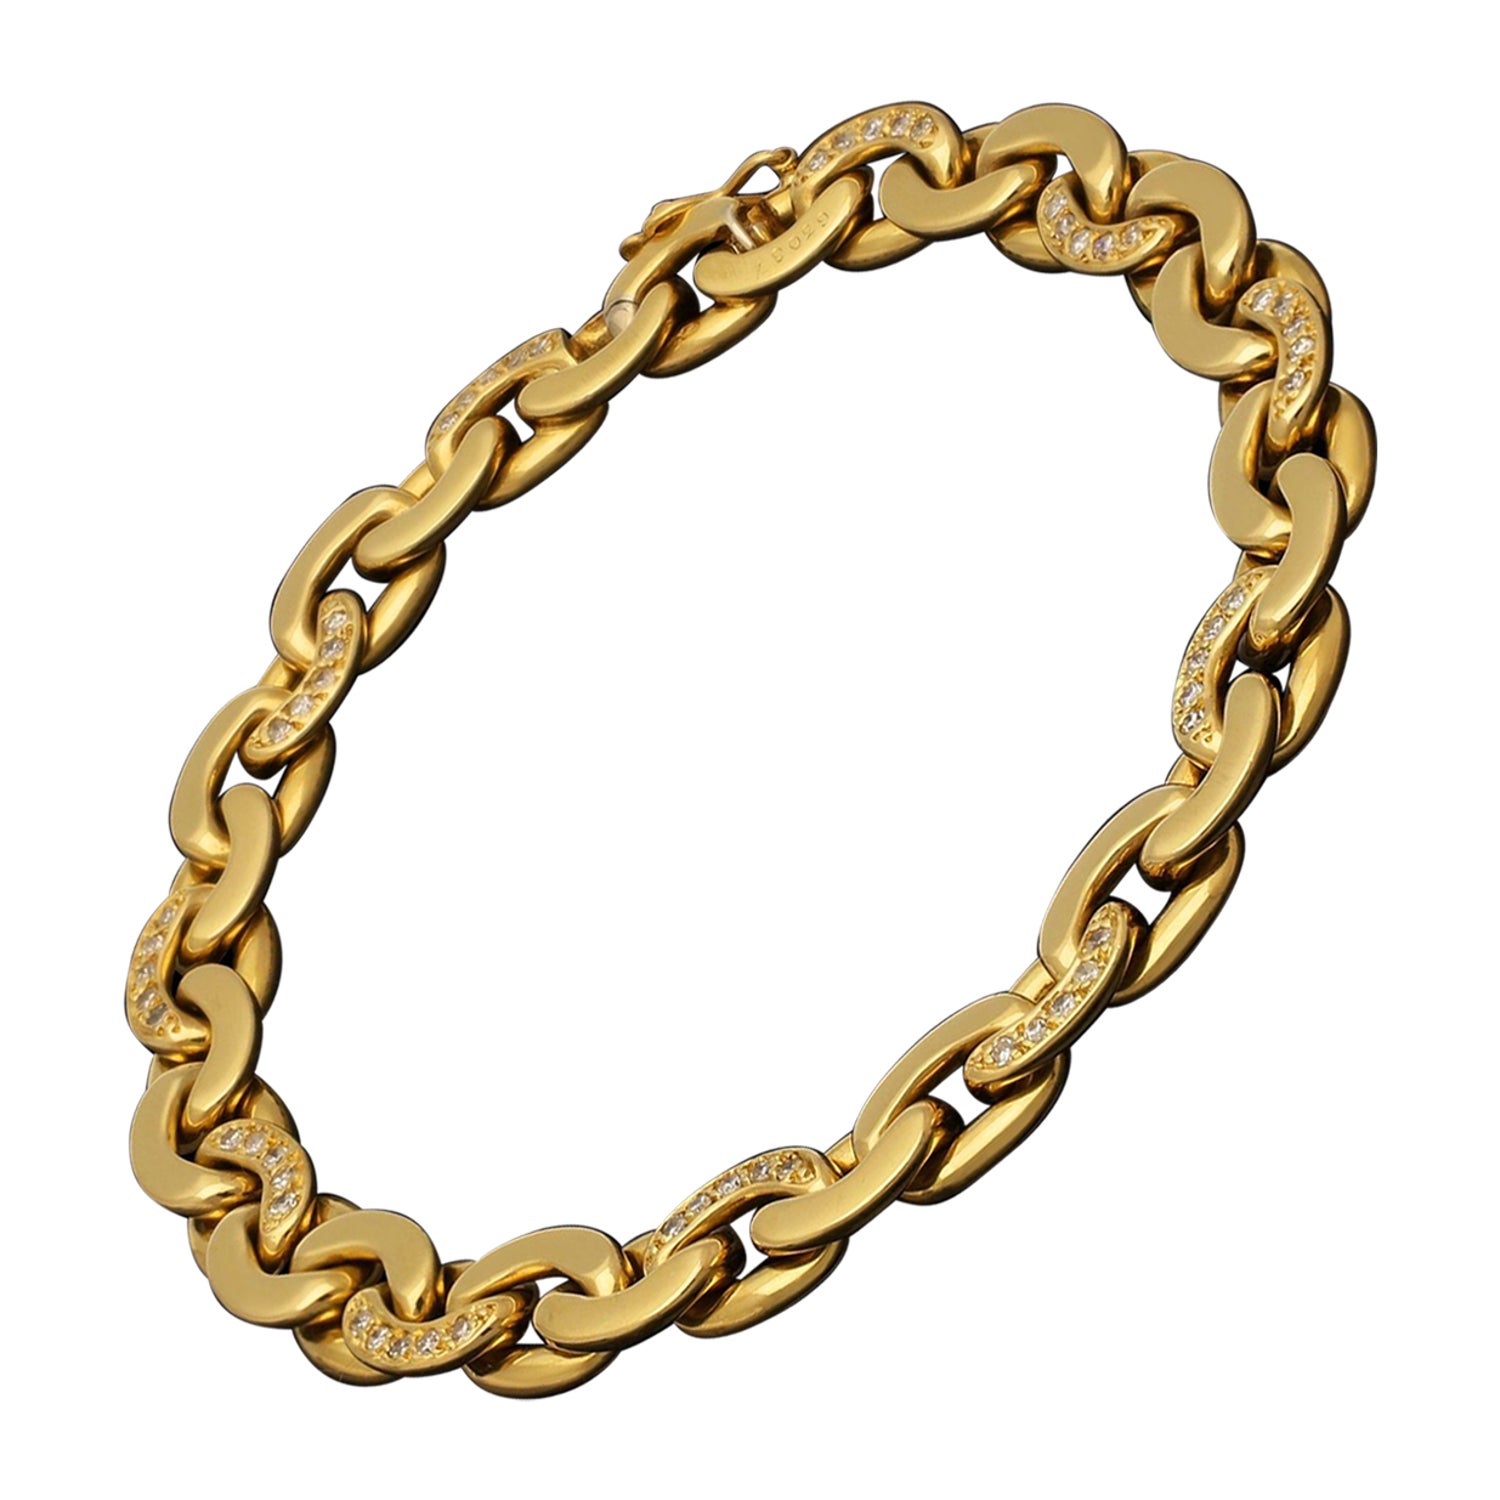 Cartier 18ct Gold and Diamond Flexible Oval Link Bracelet, Circa 1970s